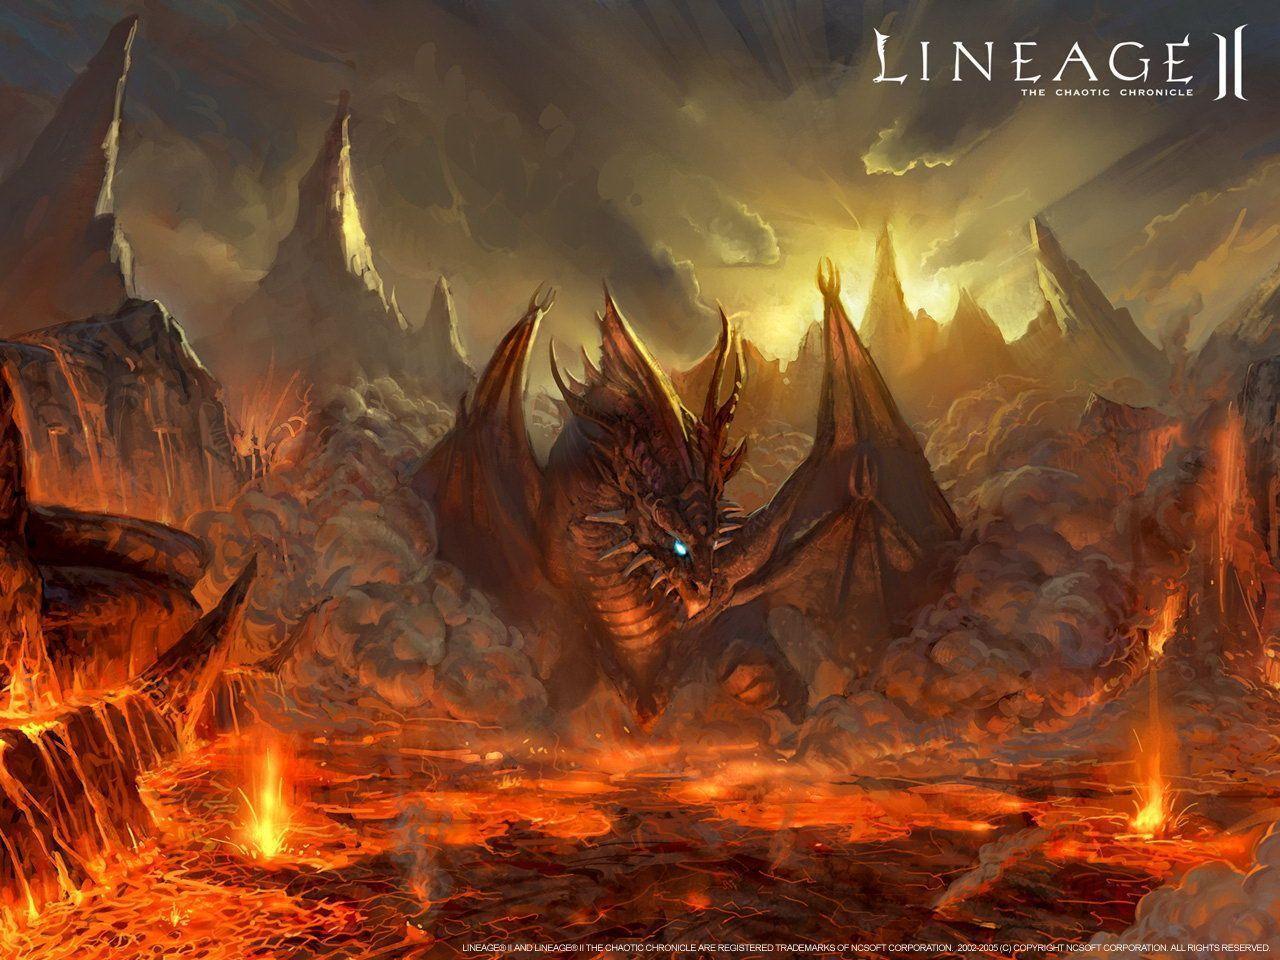 Dragons wallpaper